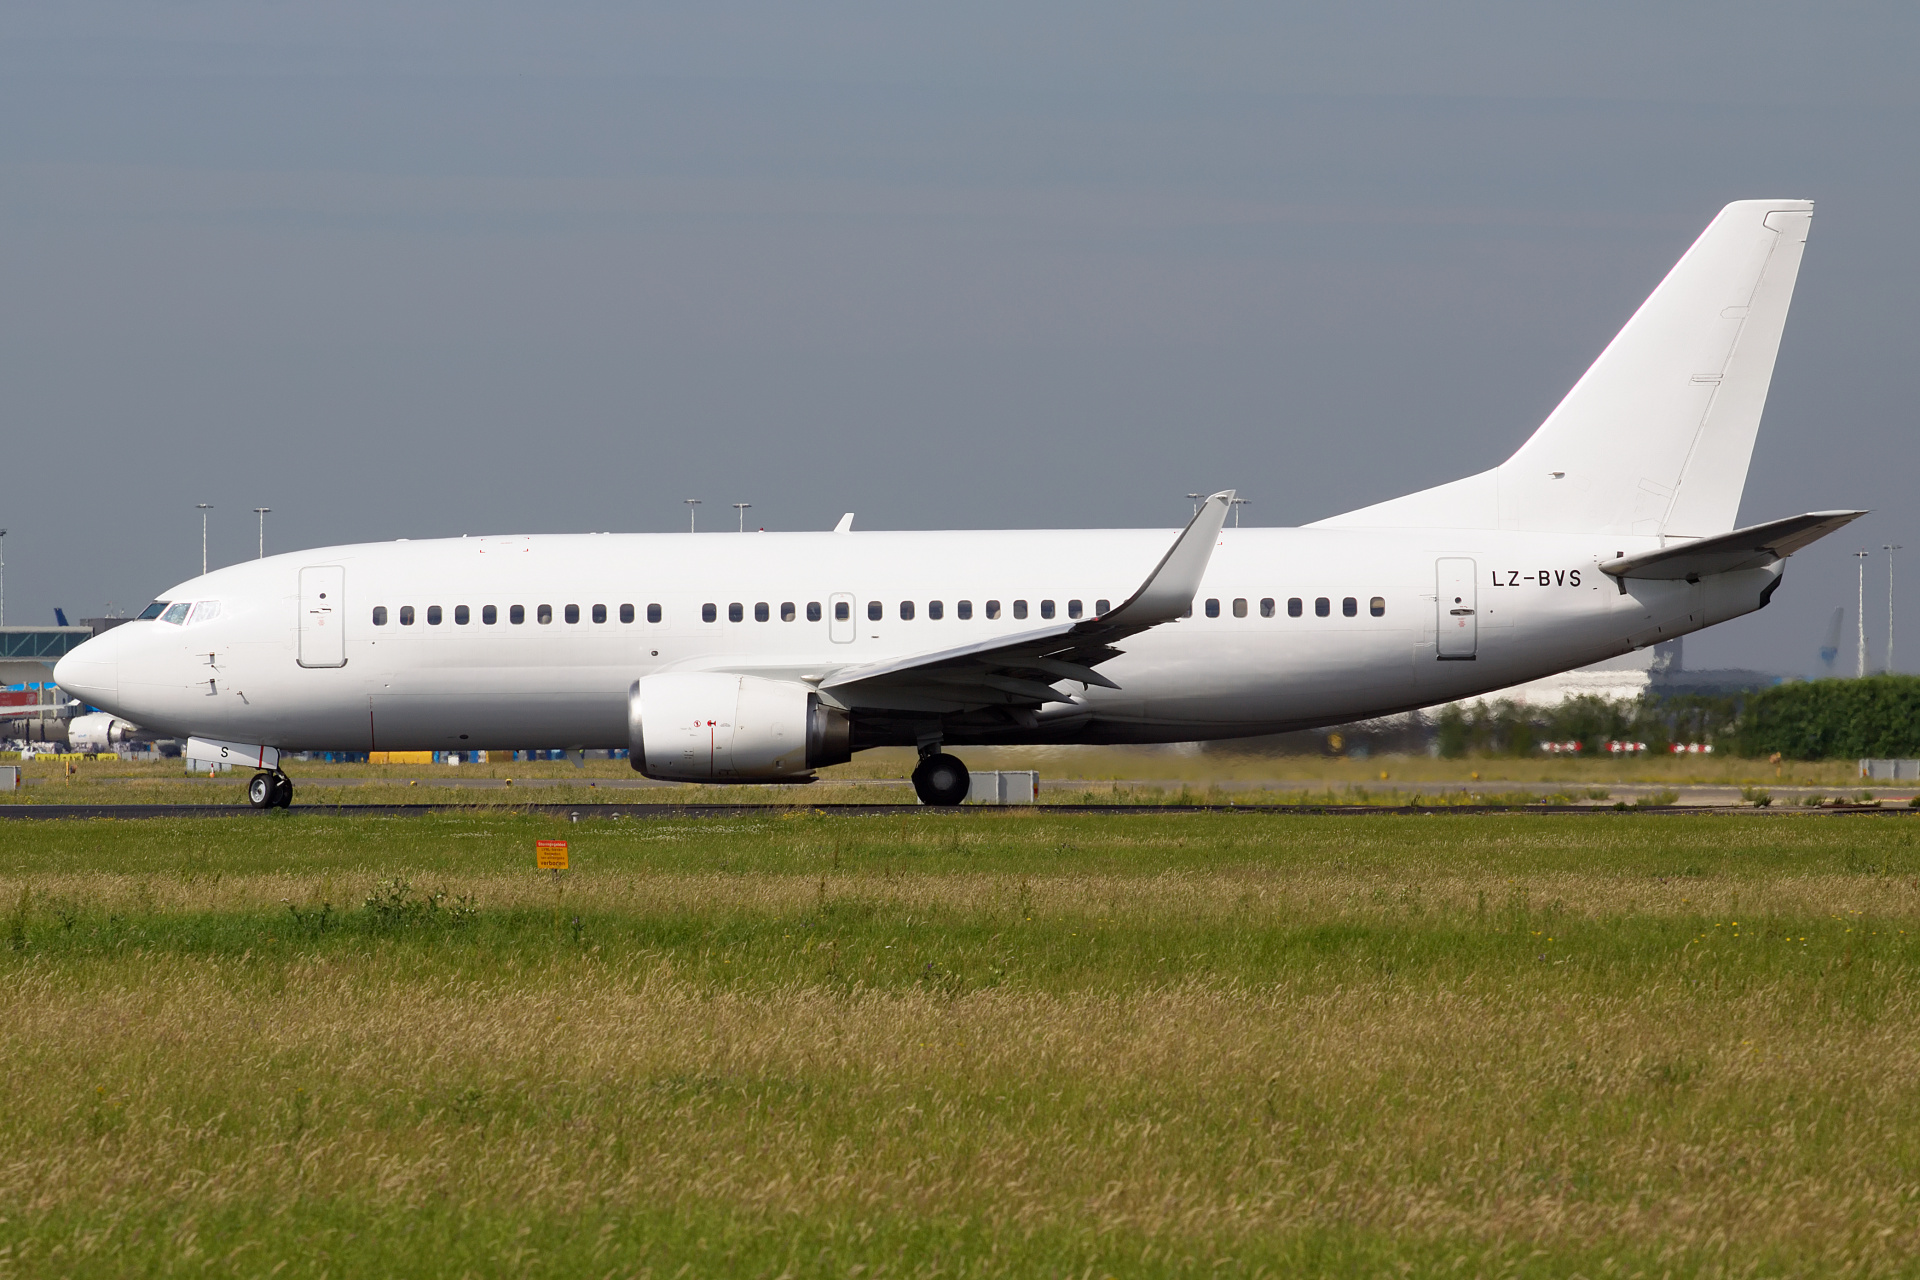 LZ-BVS, Bul Air (Samoloty » Spotting na Schiphol » Boeing 737-300)